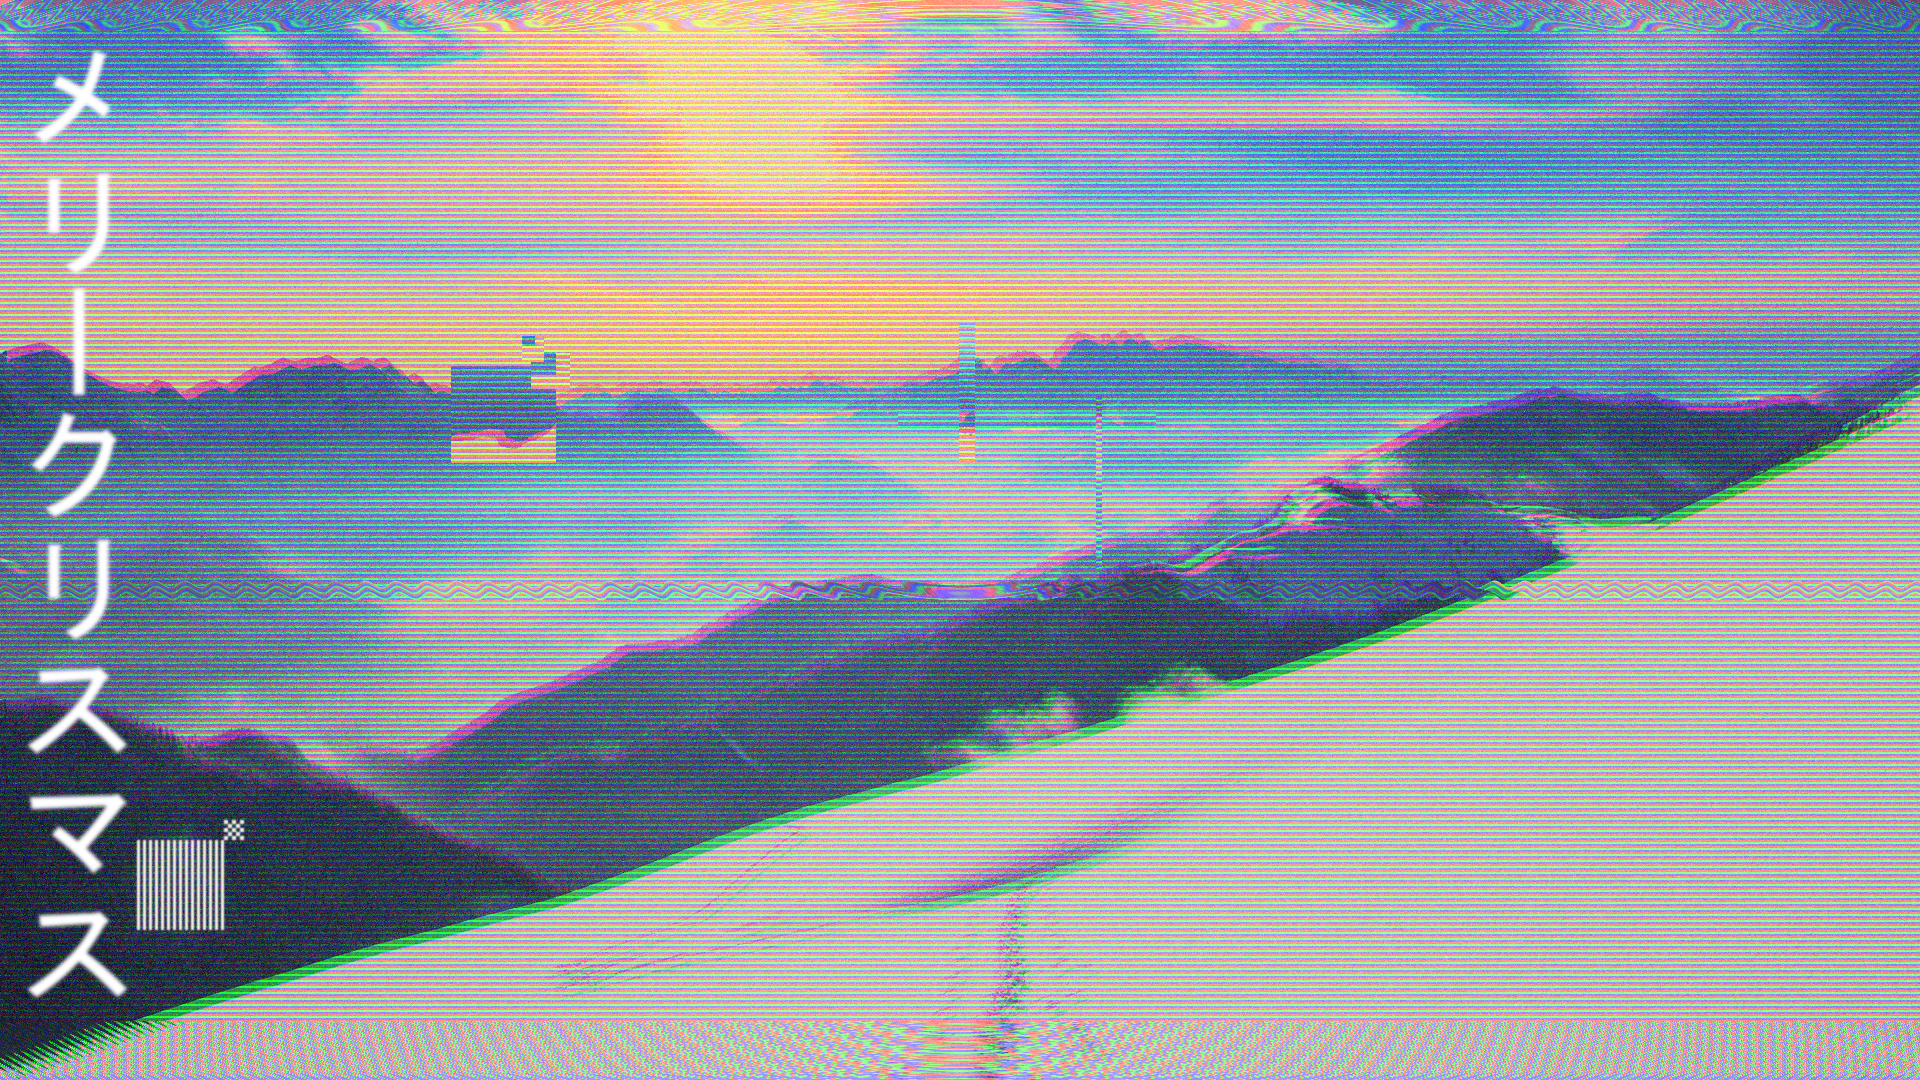 General 1920x1080 vaporwave landscape snow mountain top photo manipulation digital art